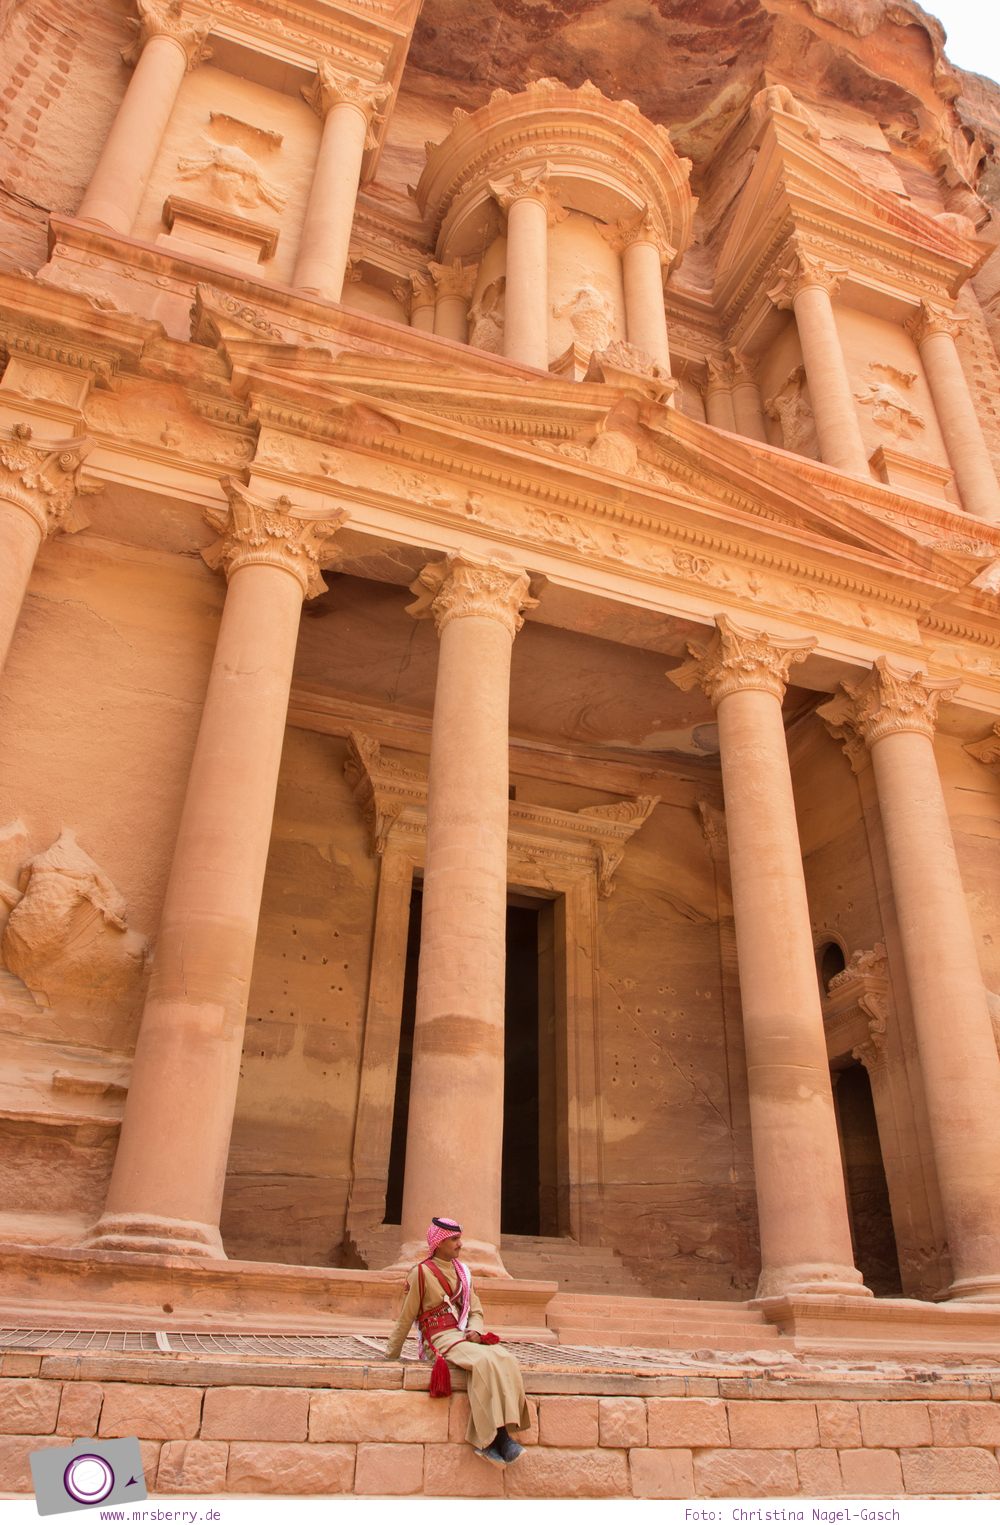 Rundreise Jordanien - ein Reisebericht: Besuch der antiken Felsenstadt Petra - das weltberühmte Schatzhaus Khazne al-Firaun